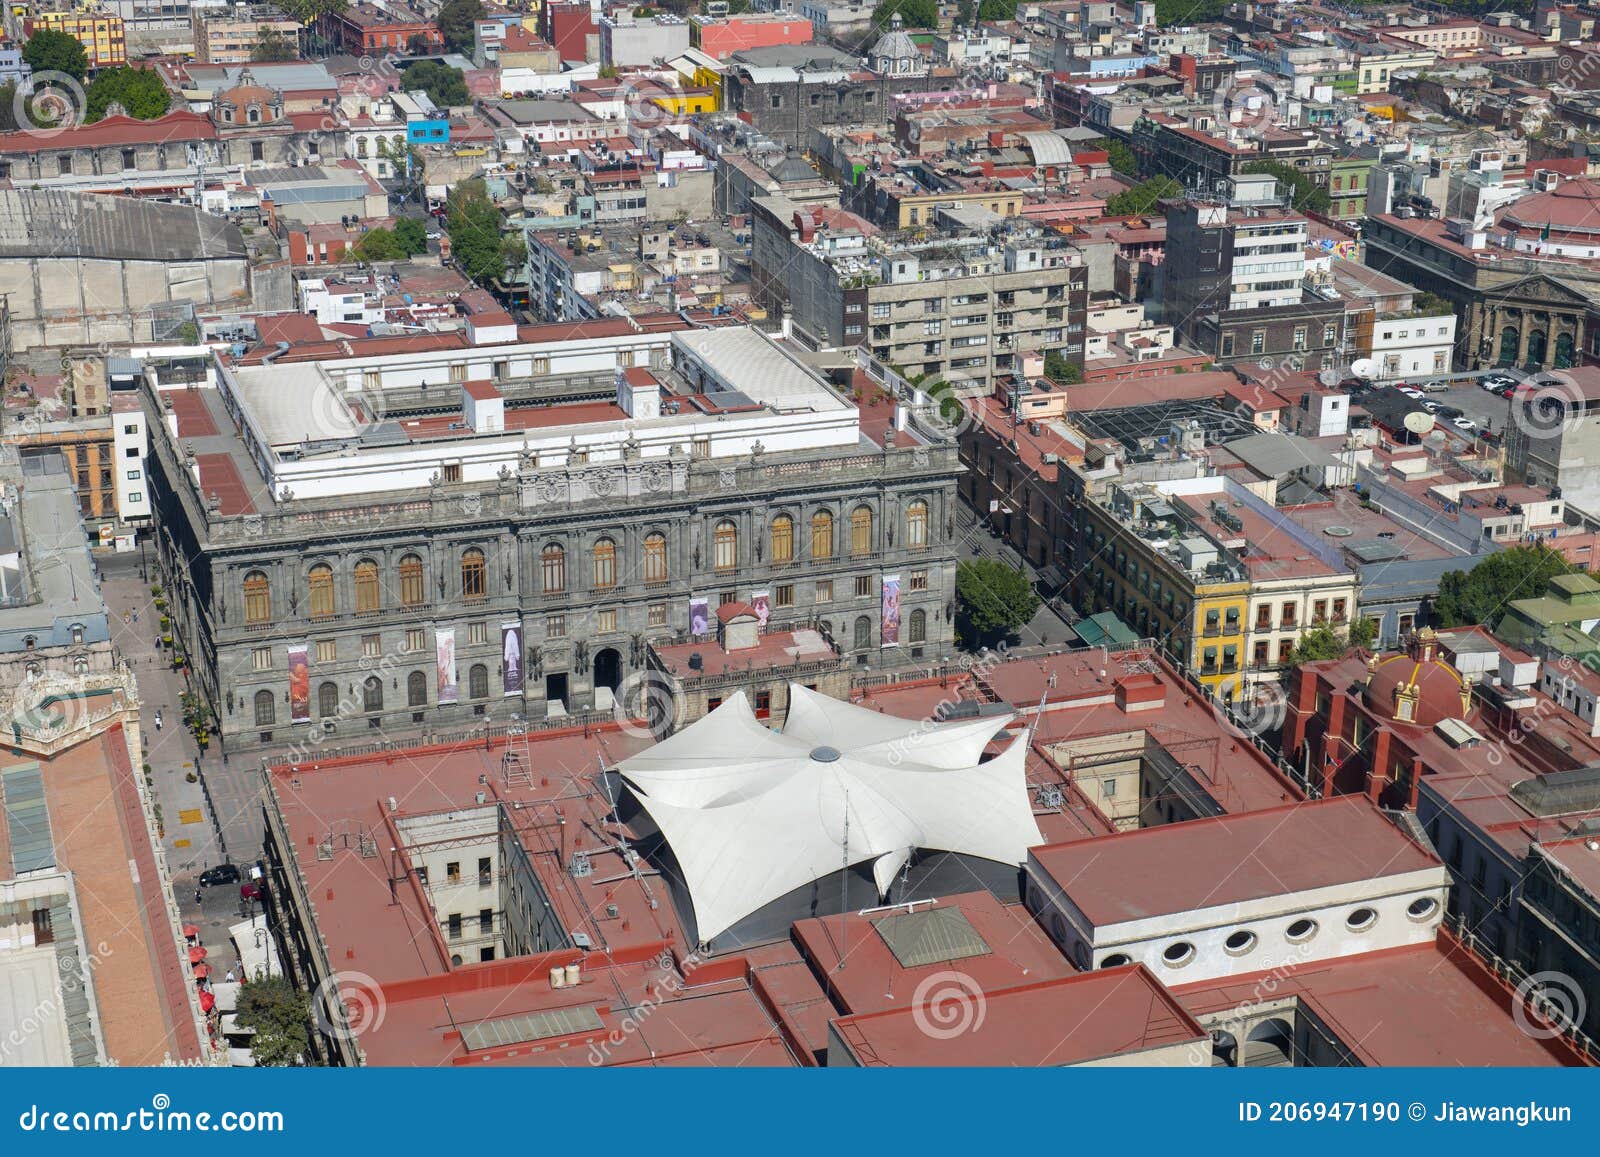 aerial view of mexico city, mexico